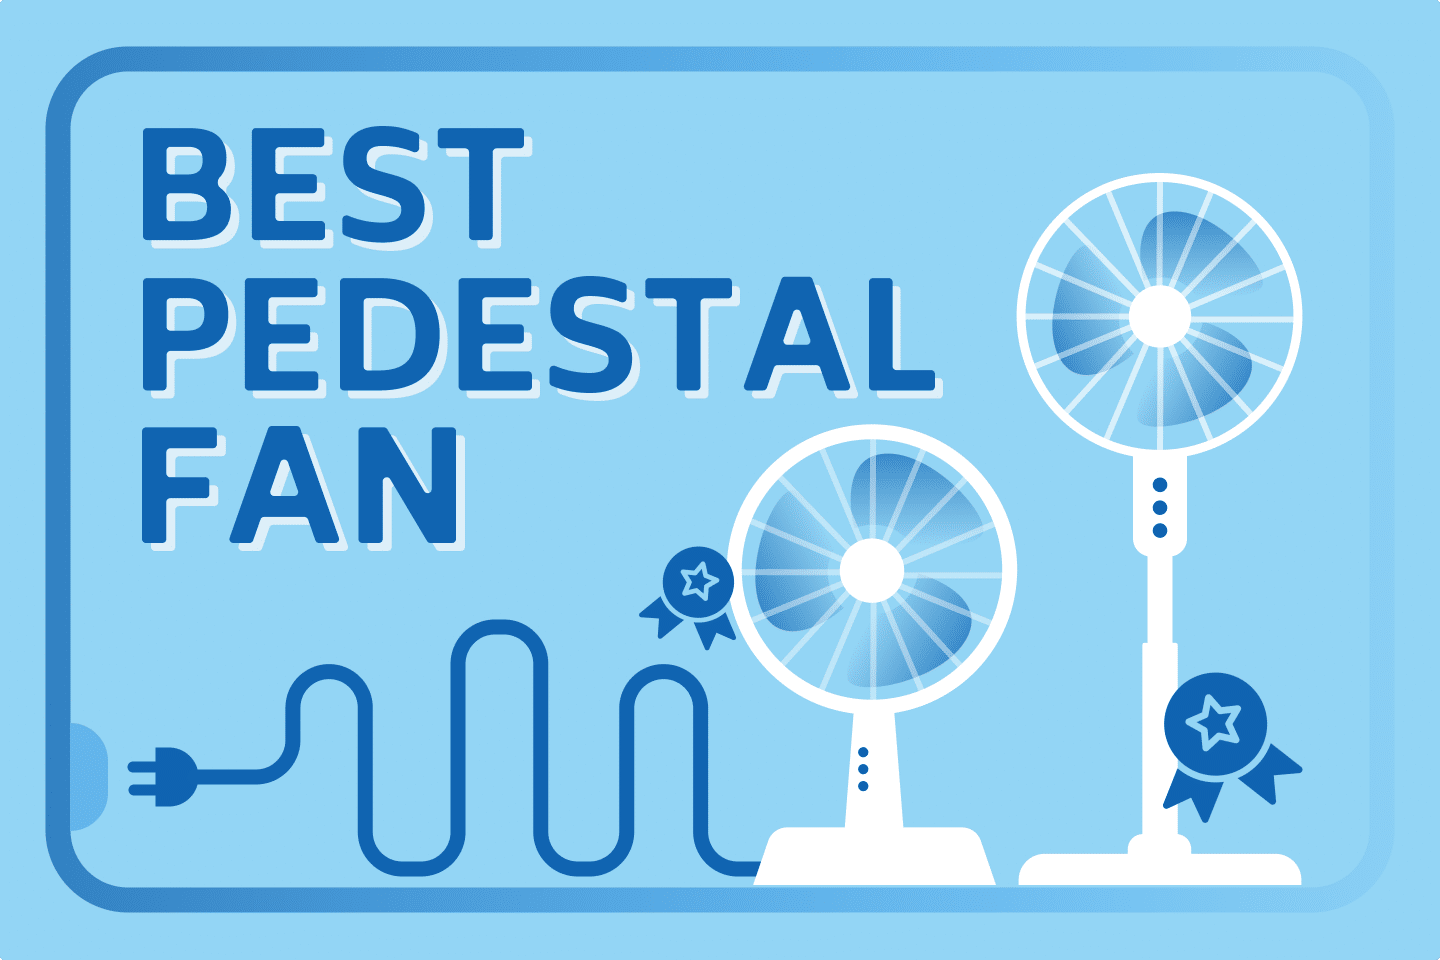 Best Pedestal Fans [9 Options]